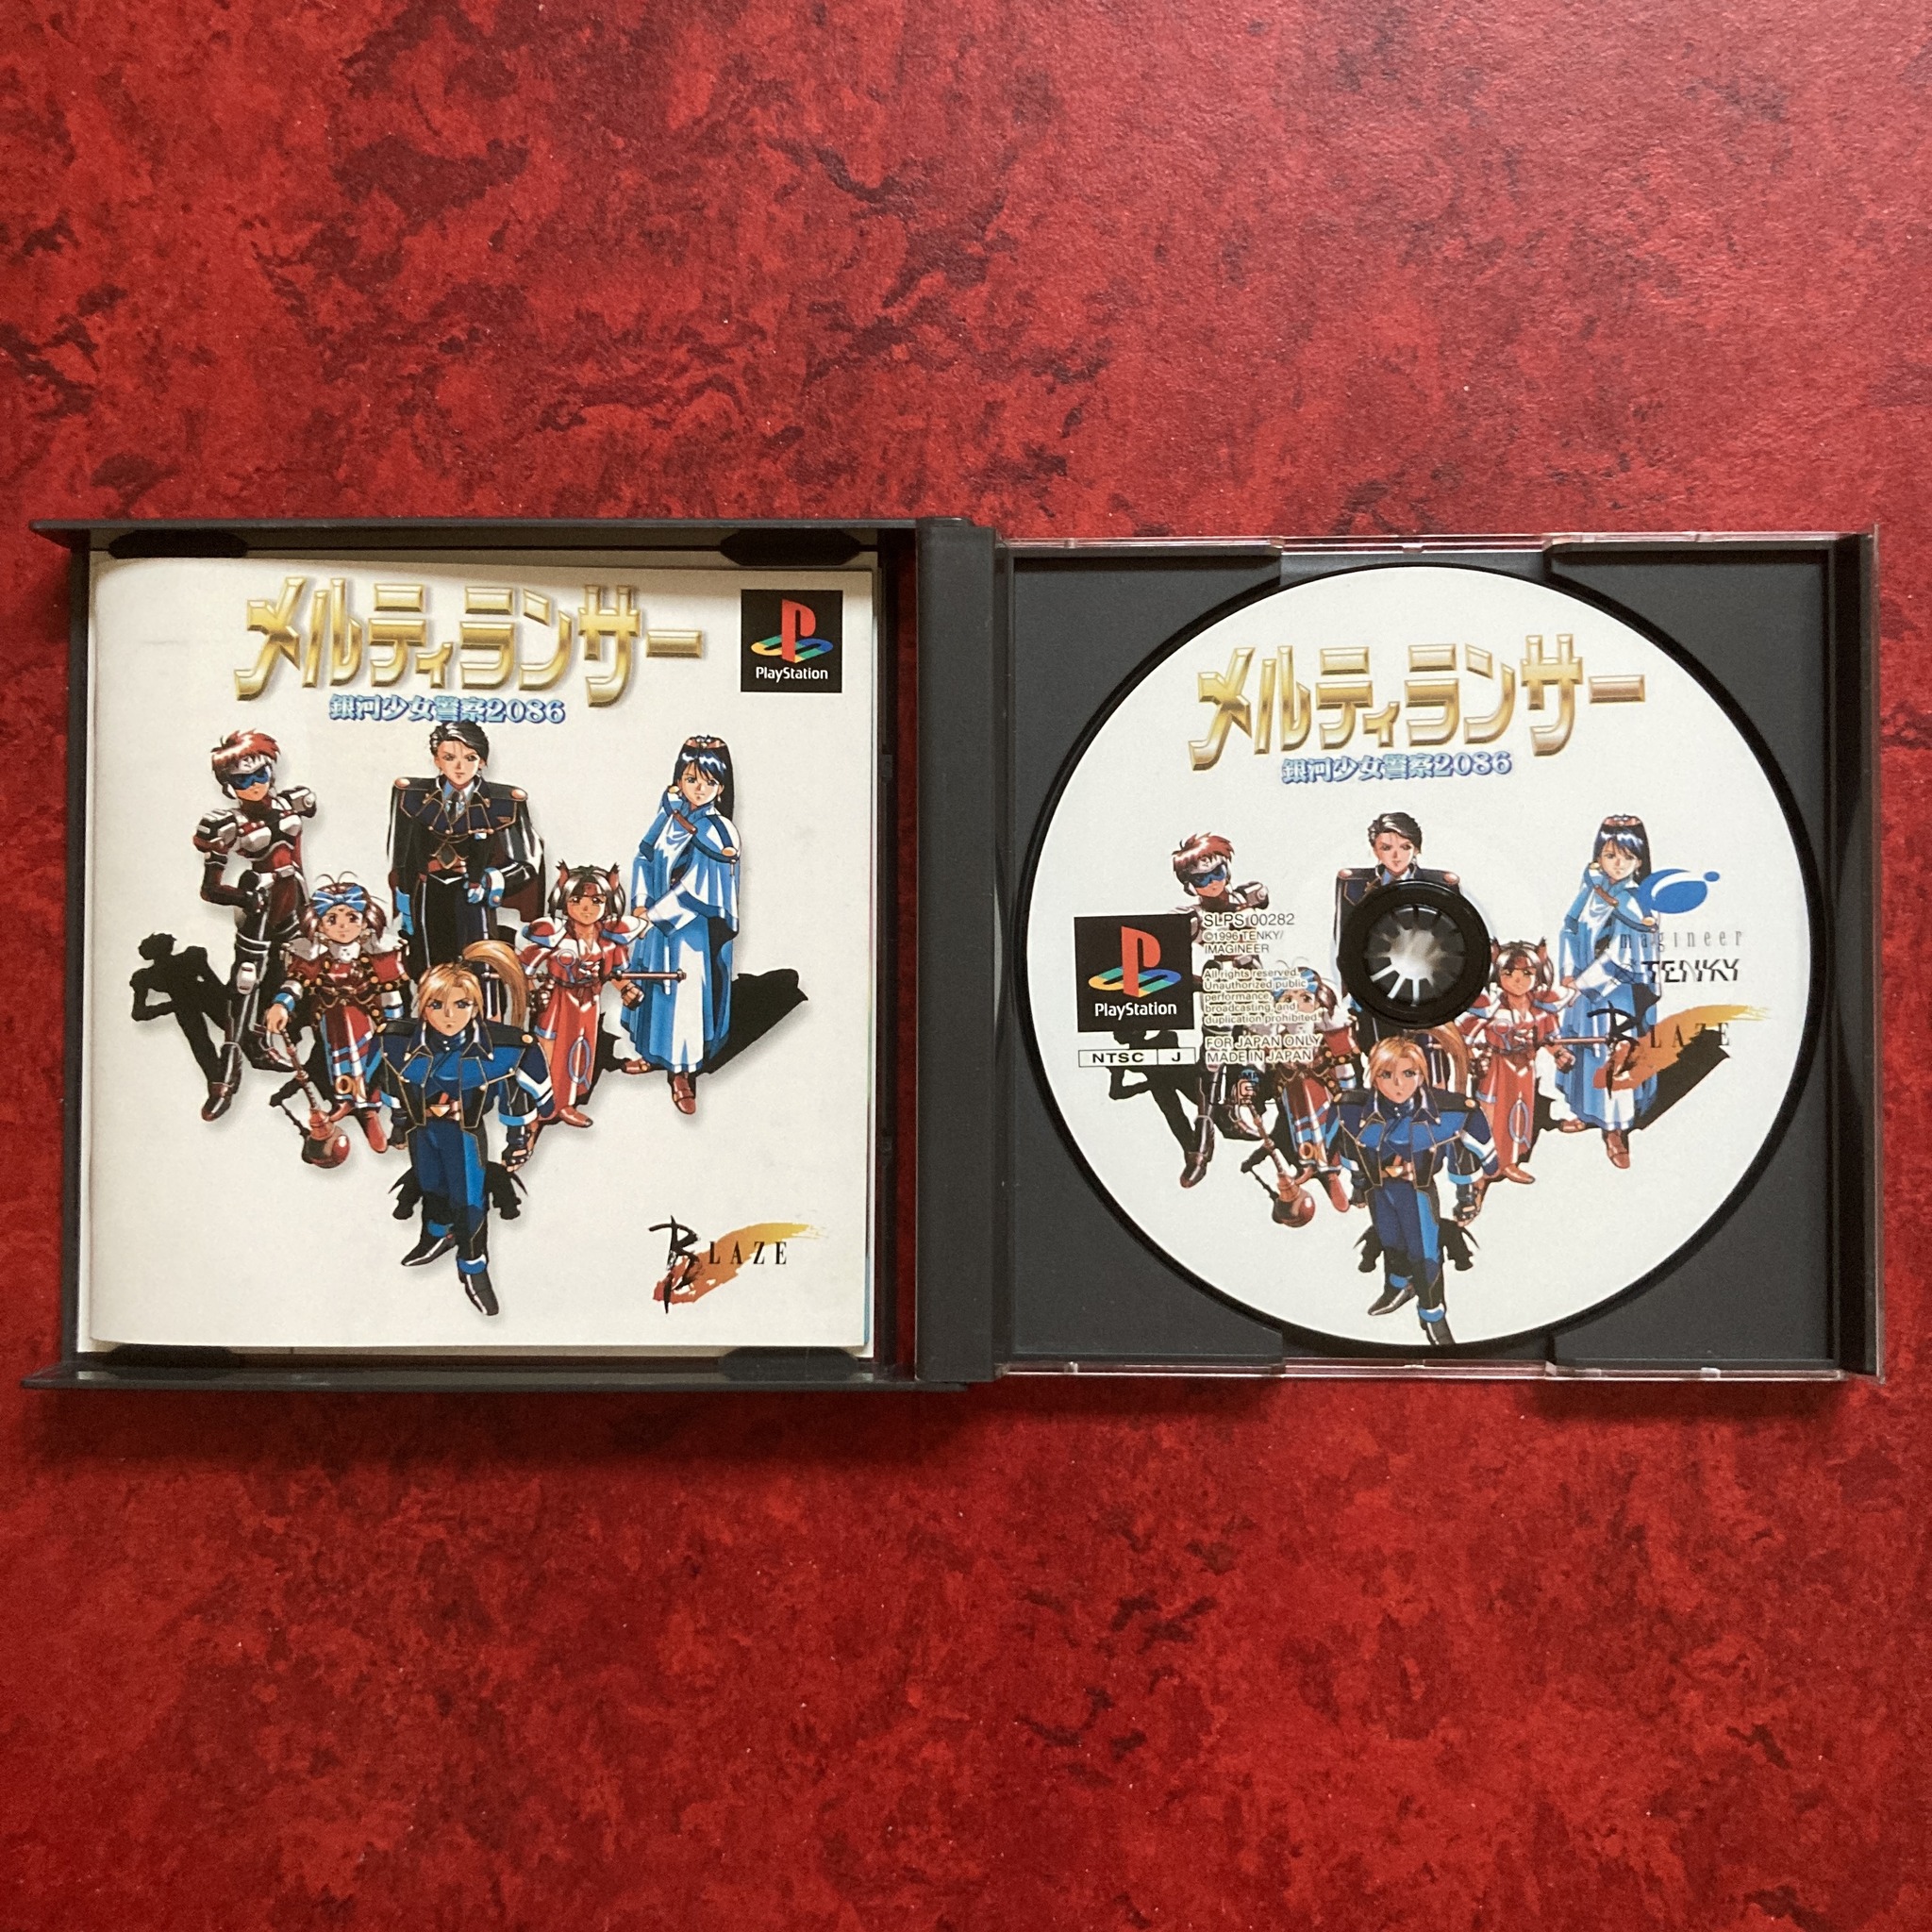 MeltyLancer - Ginga Shōjo Keisatsu 2086 (PlayStation)